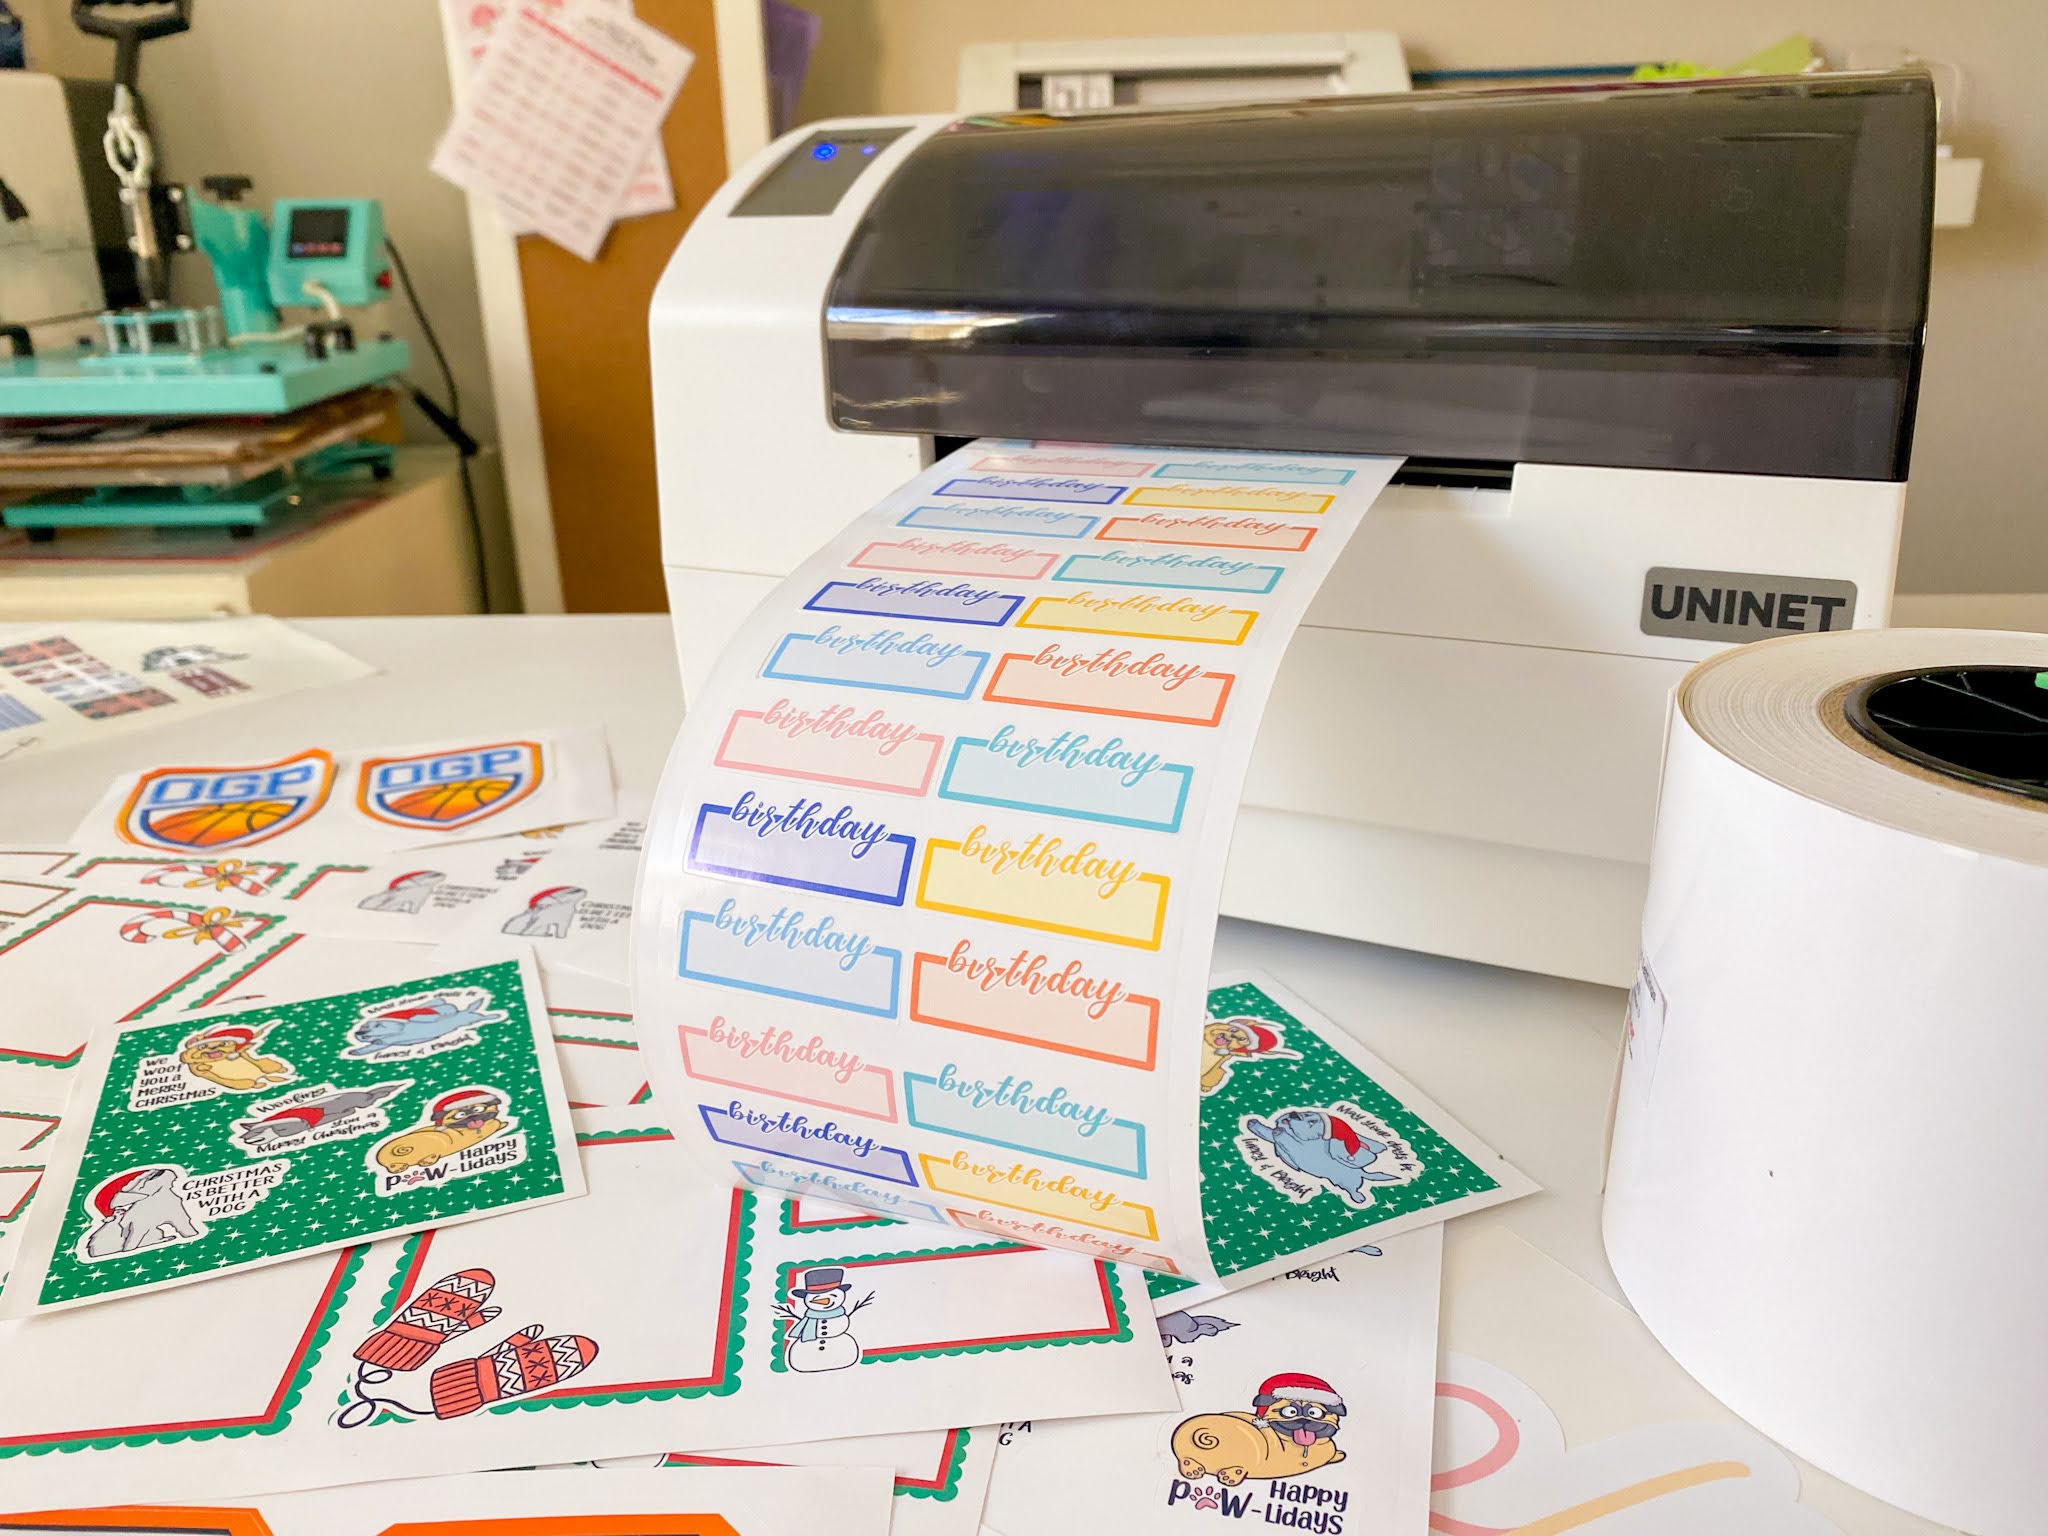 Print Cut Sticker Printer: Introducing the iColor Sticker Machine and - Silhouette School